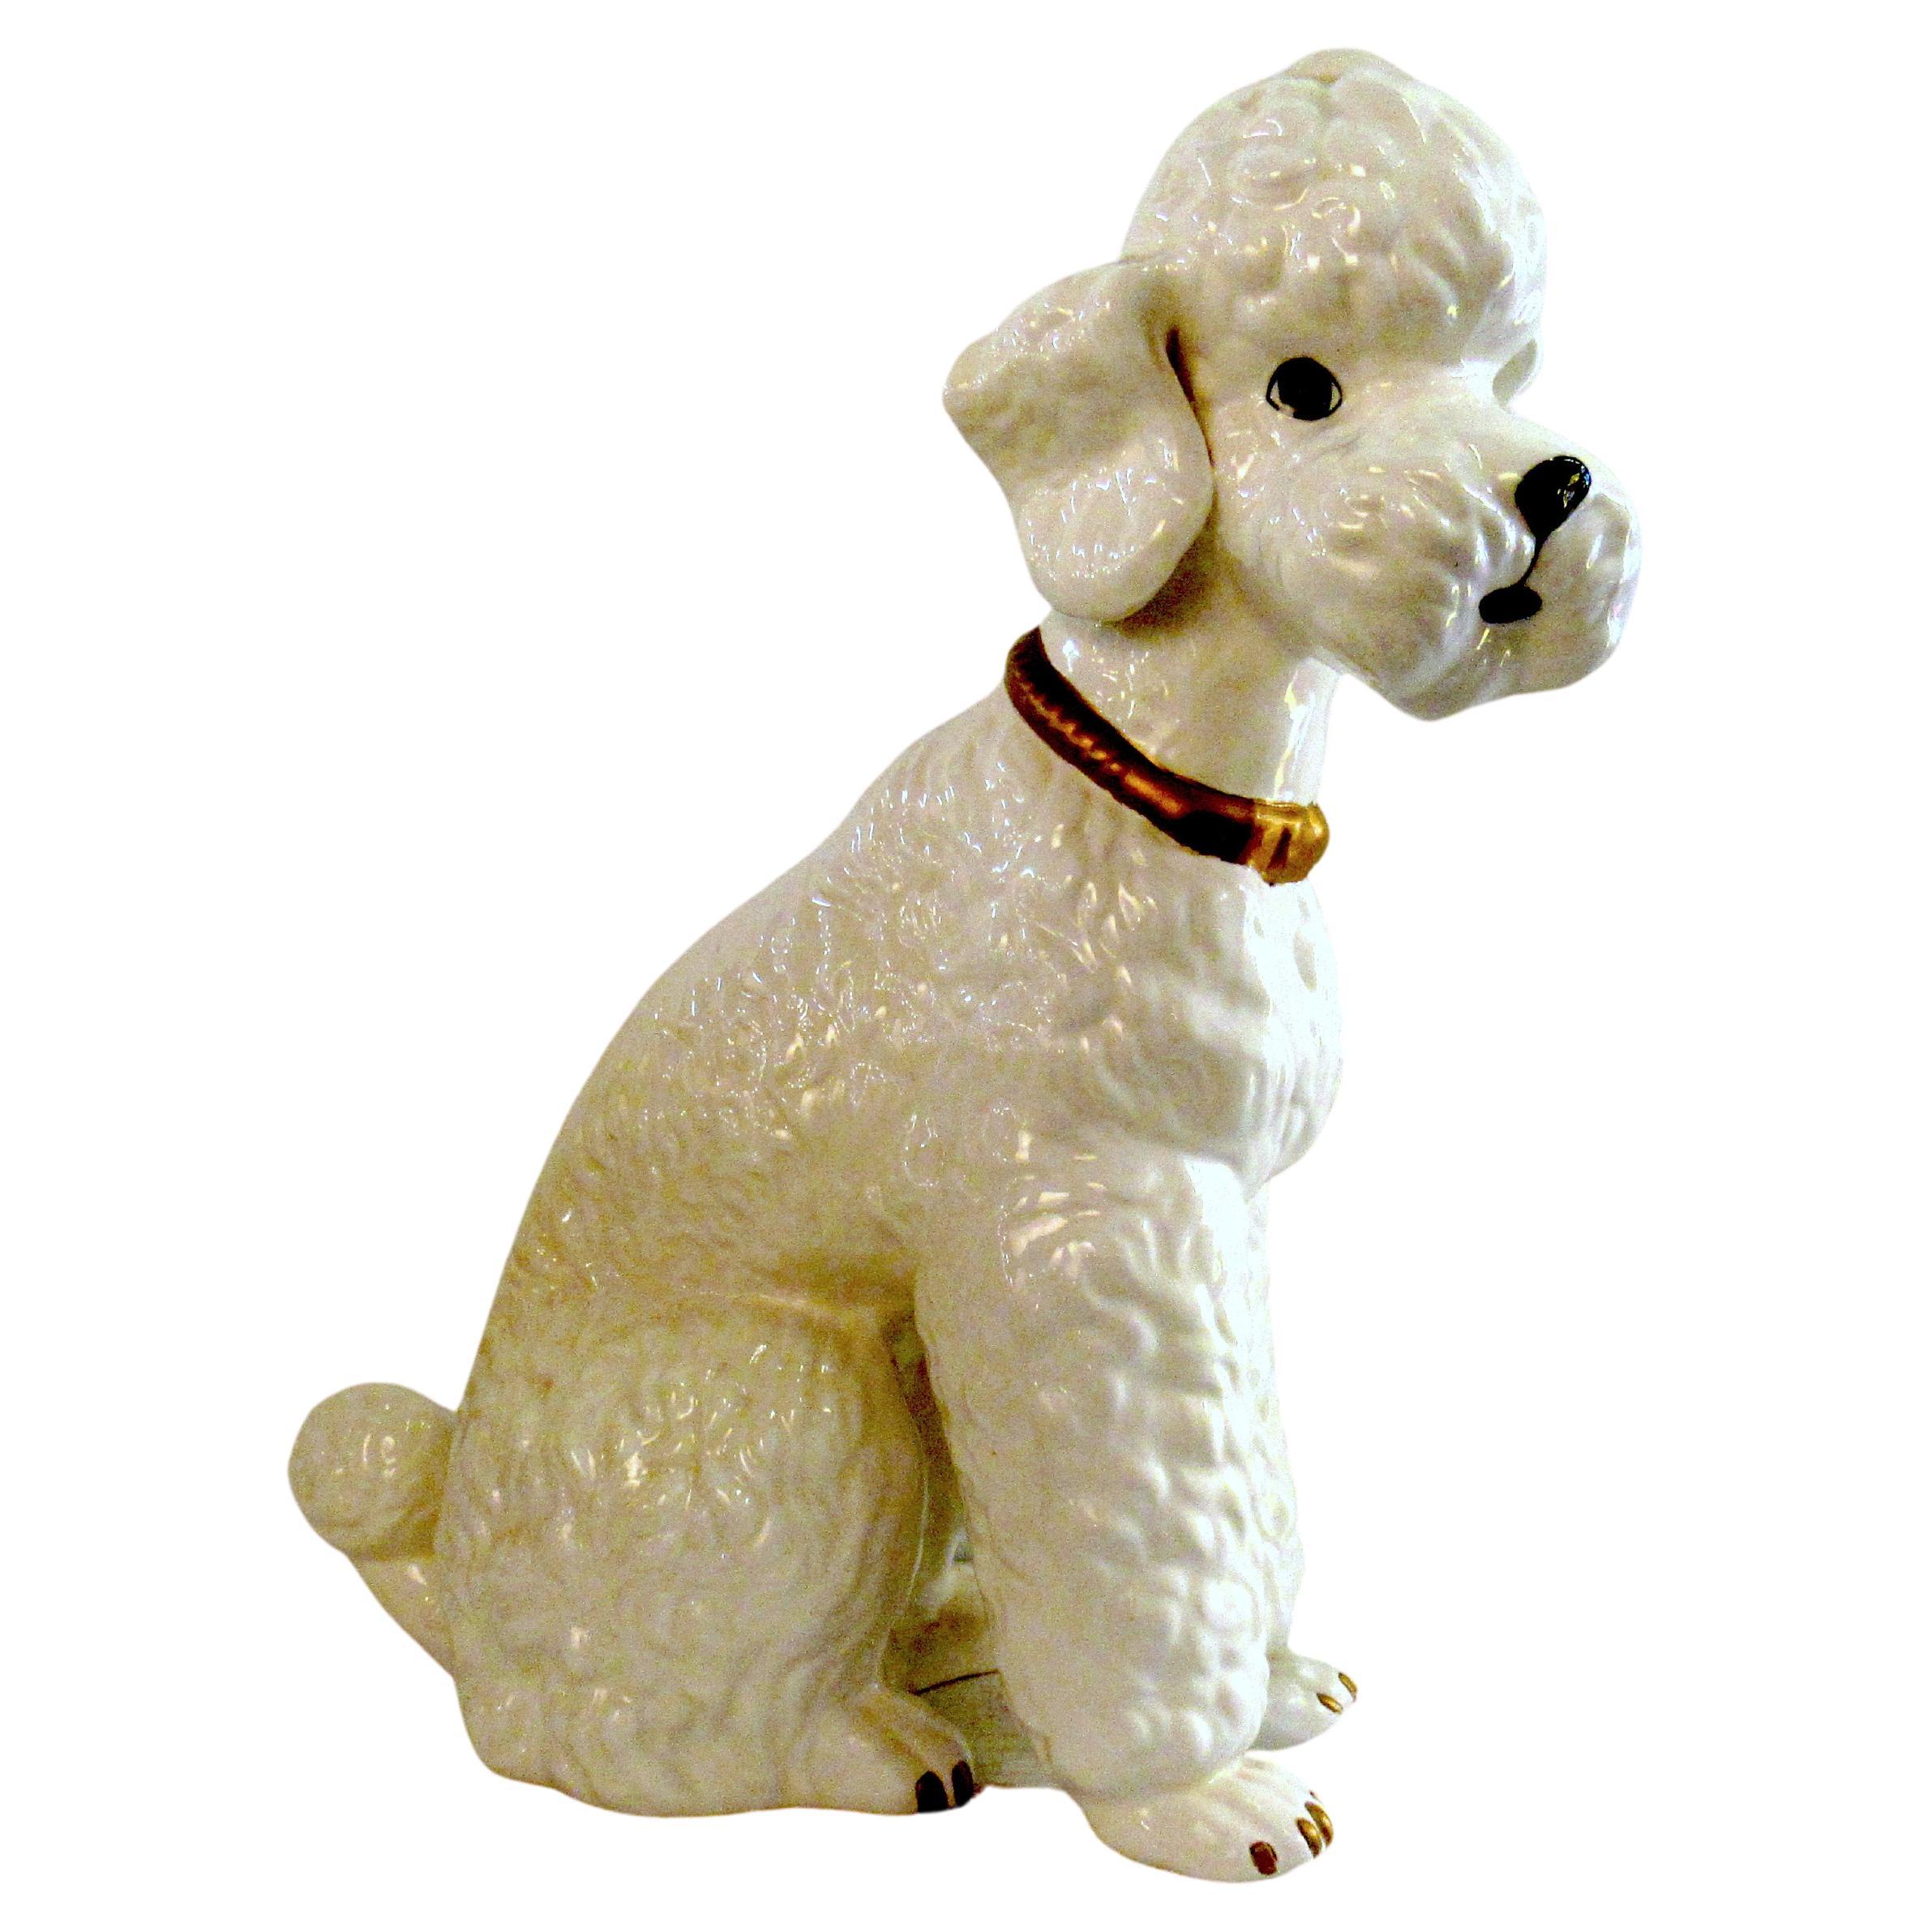 Ceramic Handmade Poodle Sculpture